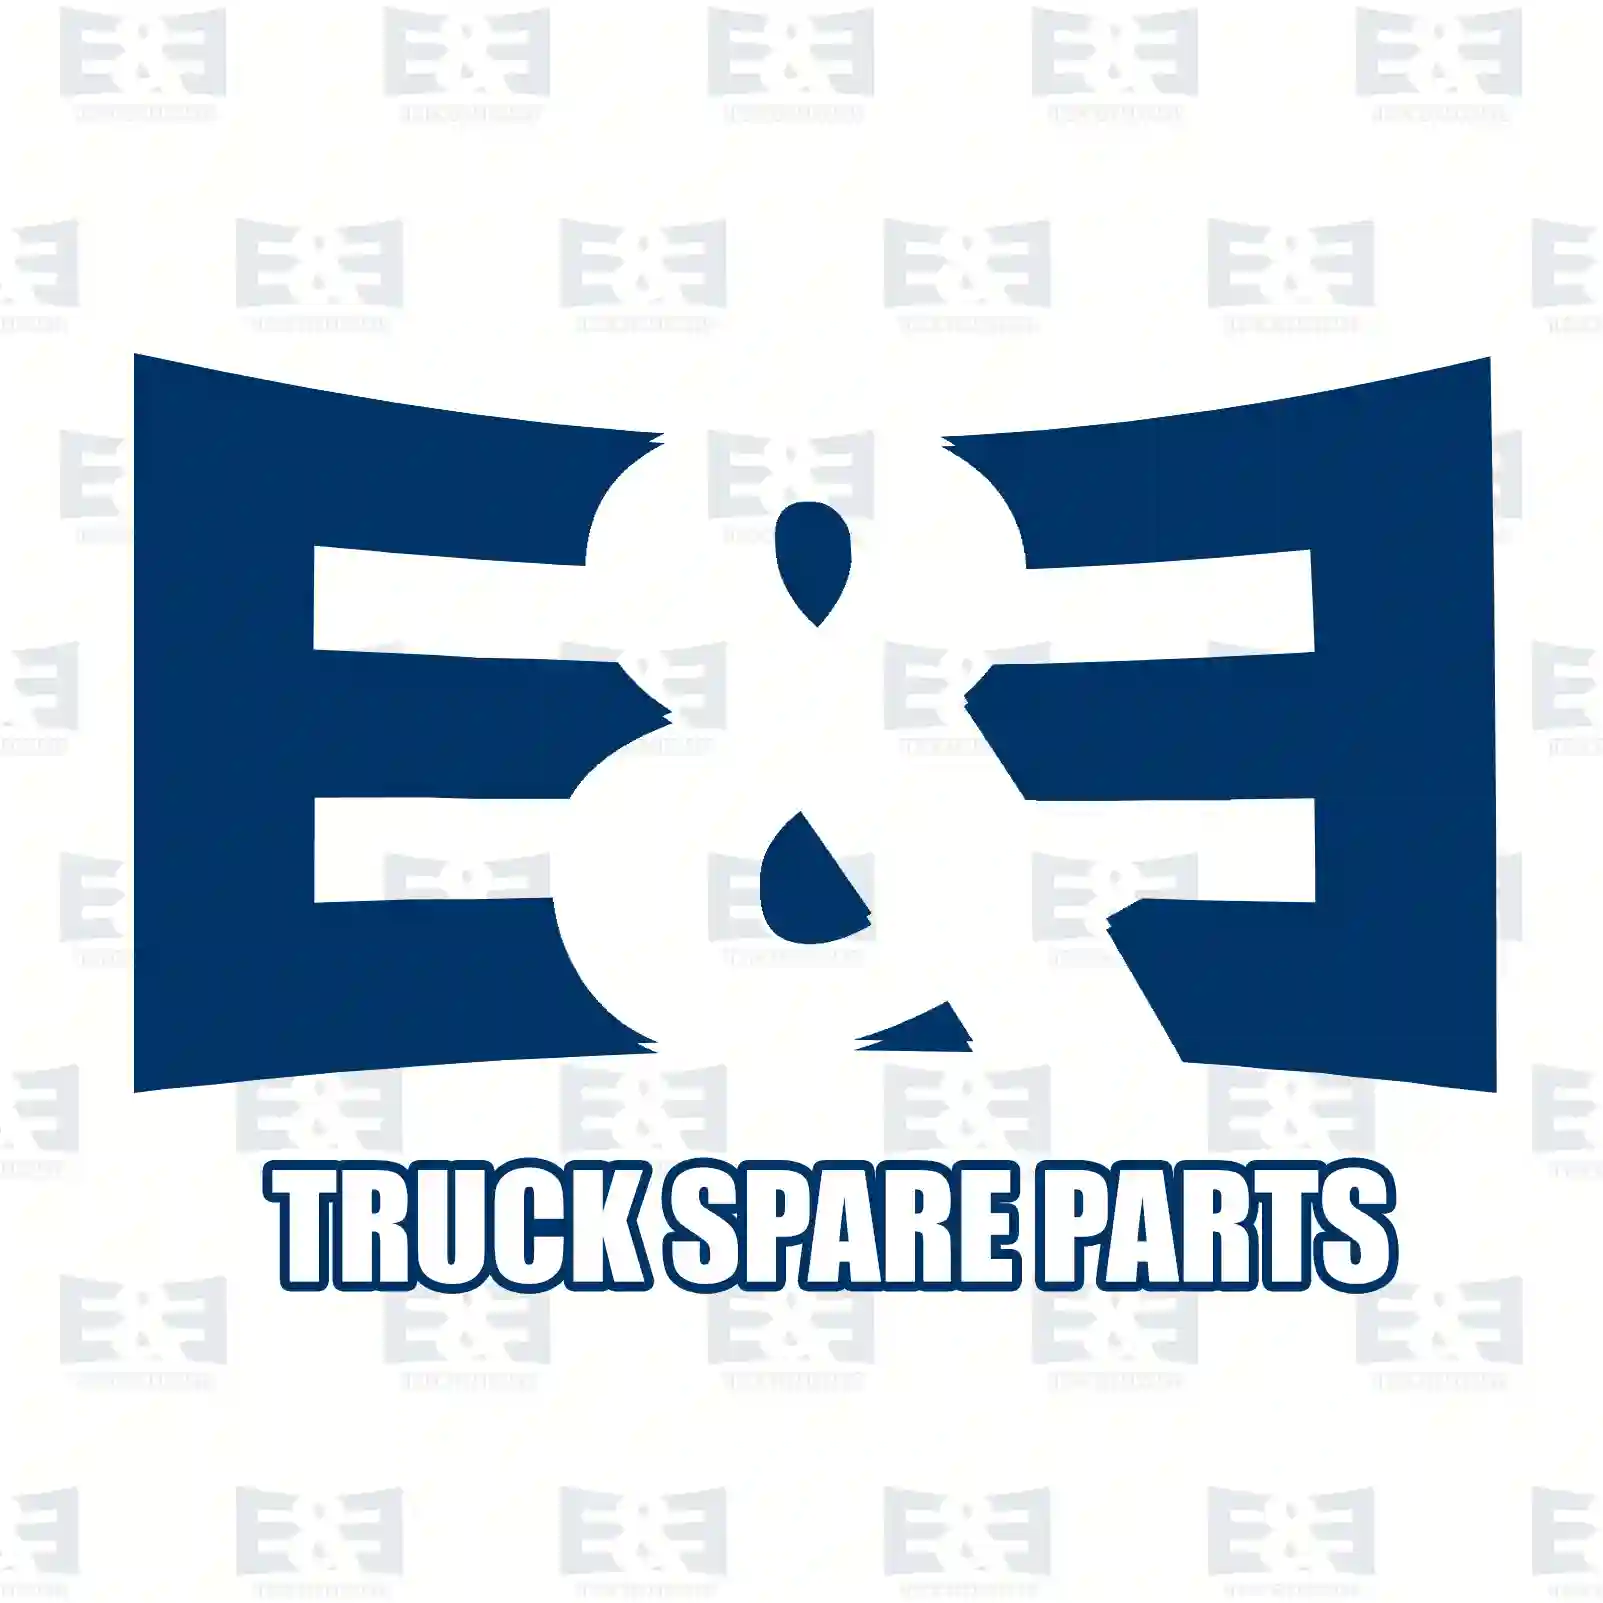 Control Arm Control arm, right, EE No 2E2270744 ,  oem no:3521P1, 3521P2, 1352225080, 1352226080, 3521P1, 3521P2 E&E Truck Spare Parts | Truck Spare Parts, Auotomotive Spare Parts